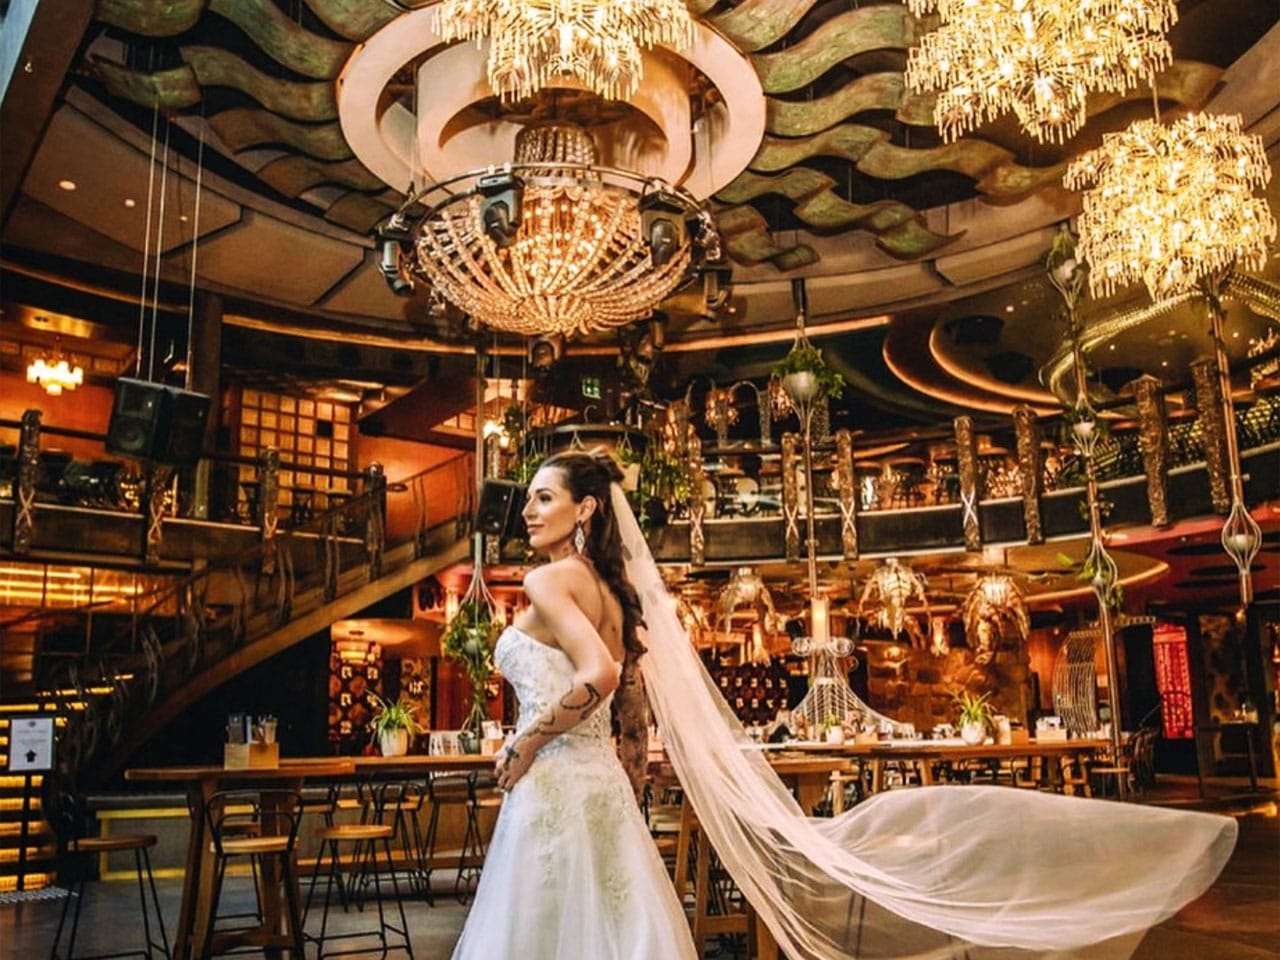 Bride walking through lavish dining area